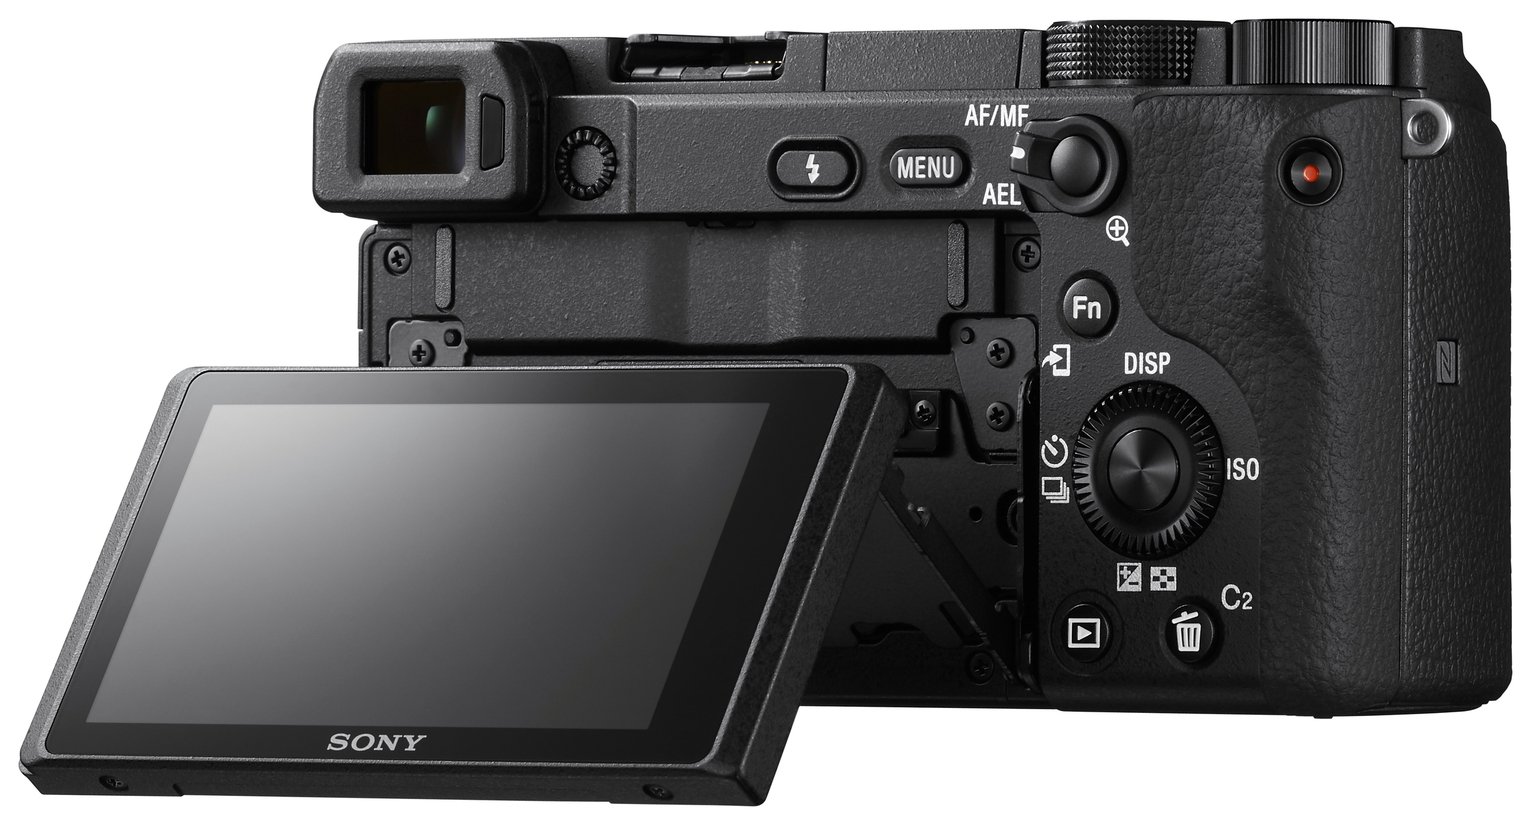 Sony 6400 E Mount Camera with SEP1650 Lens Review